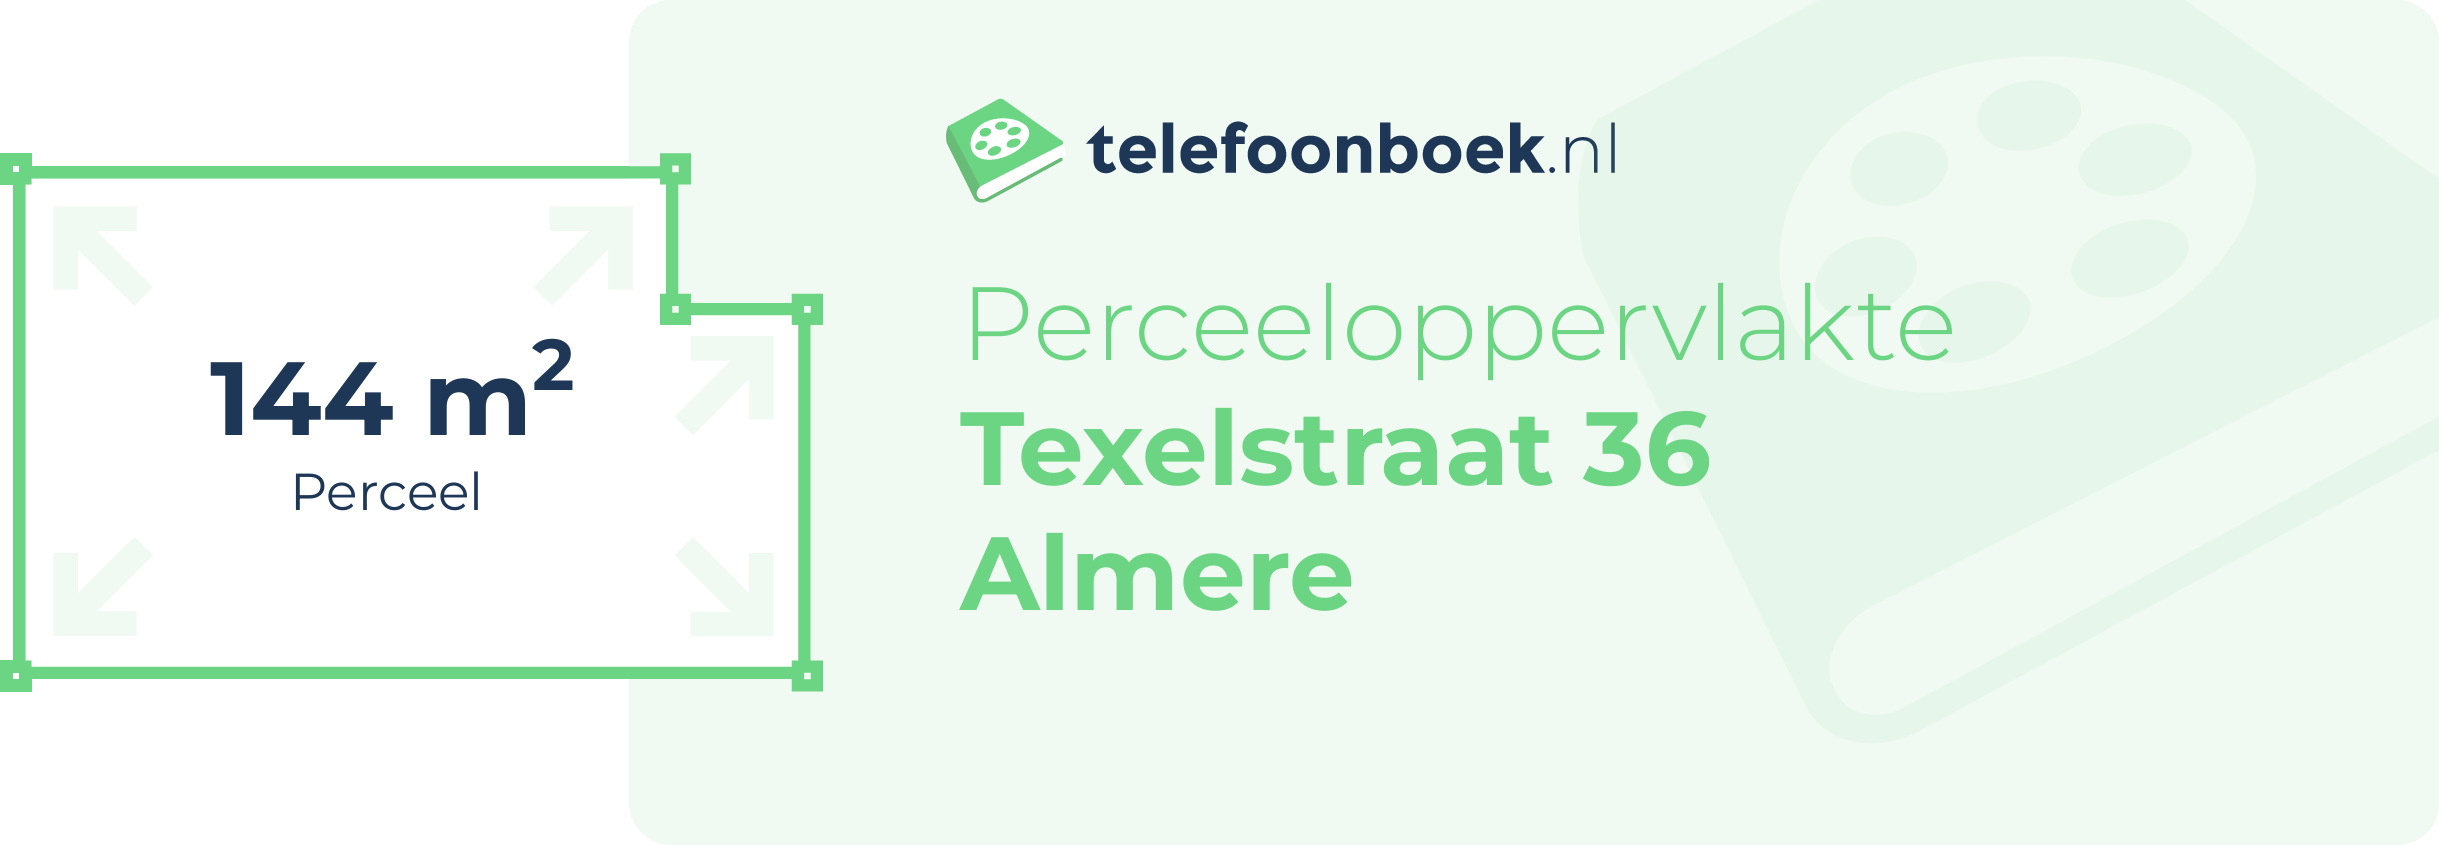 Perceeloppervlakte Texelstraat 36 Almere